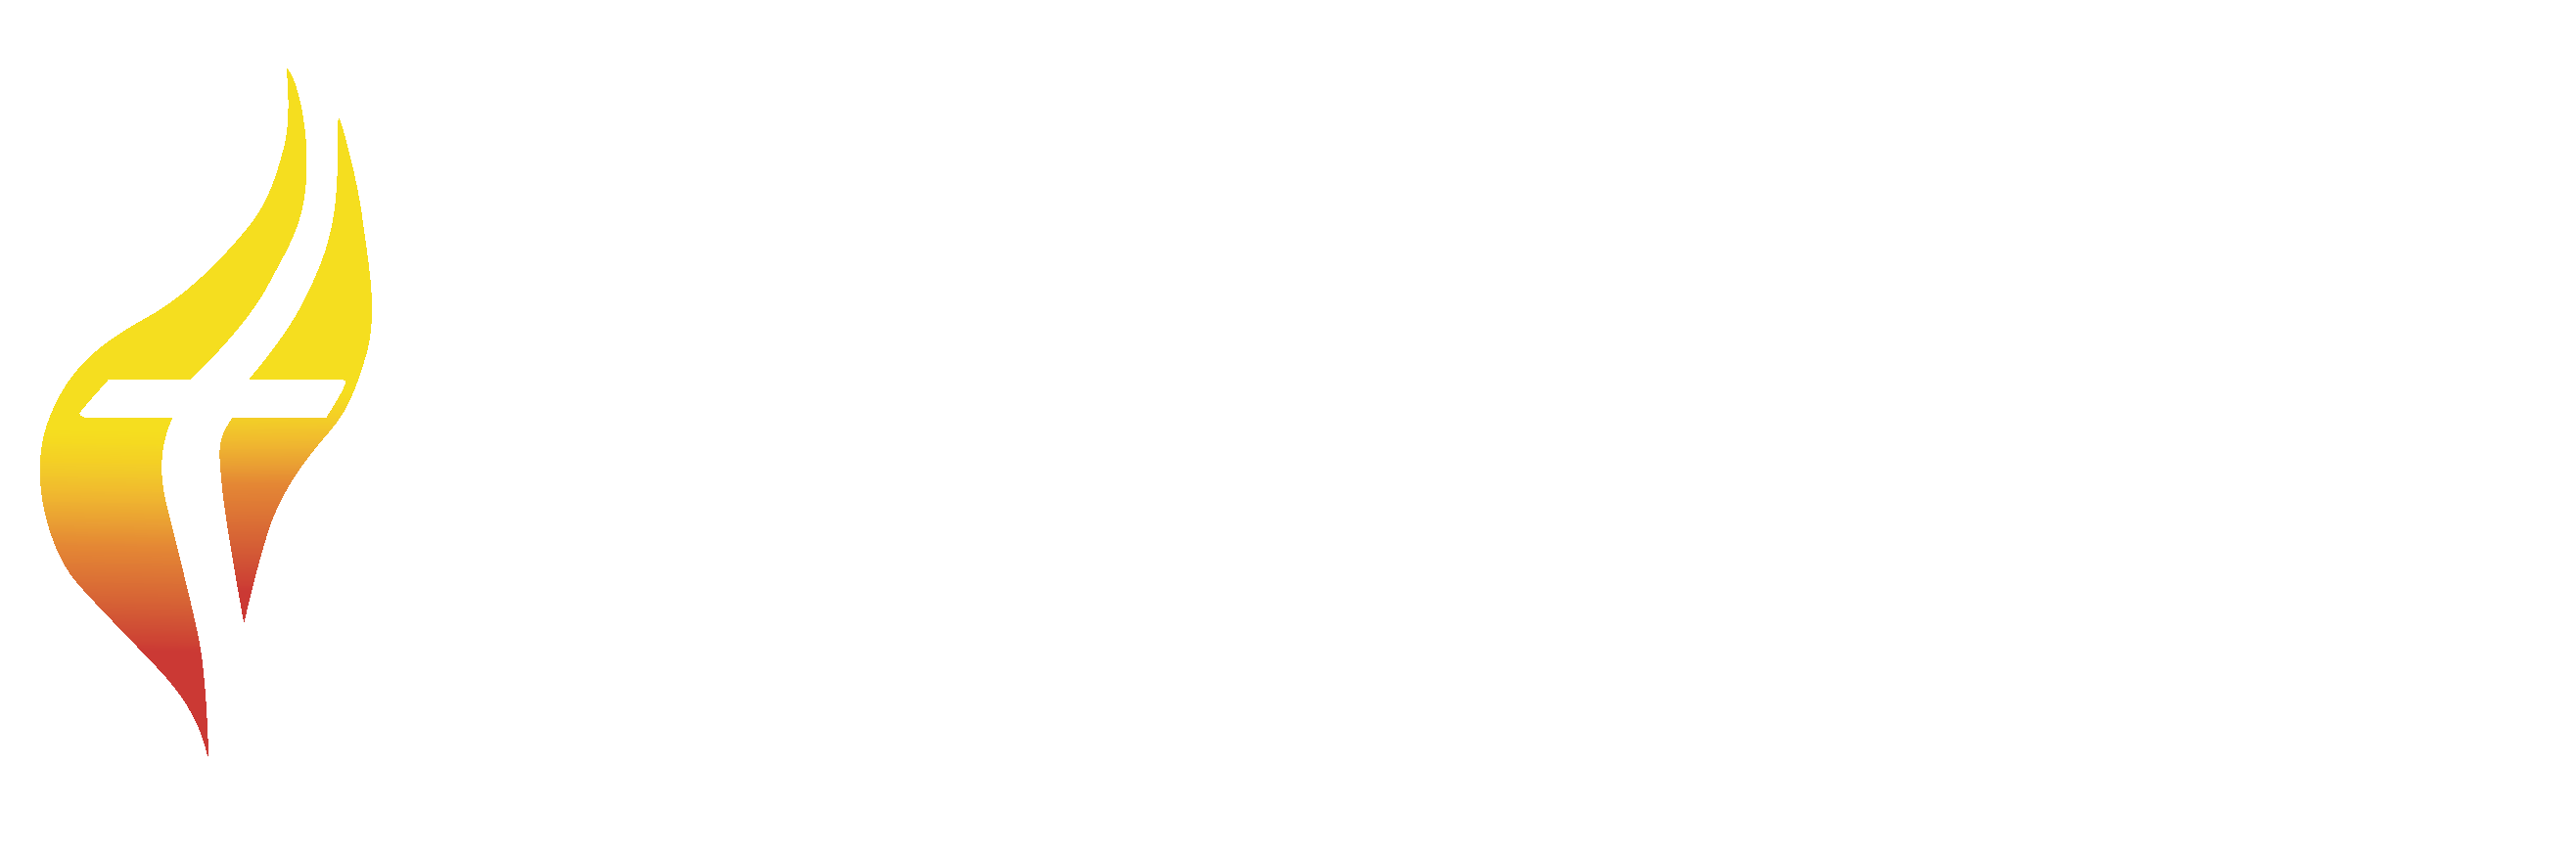 Tabernacle of God Christian Church